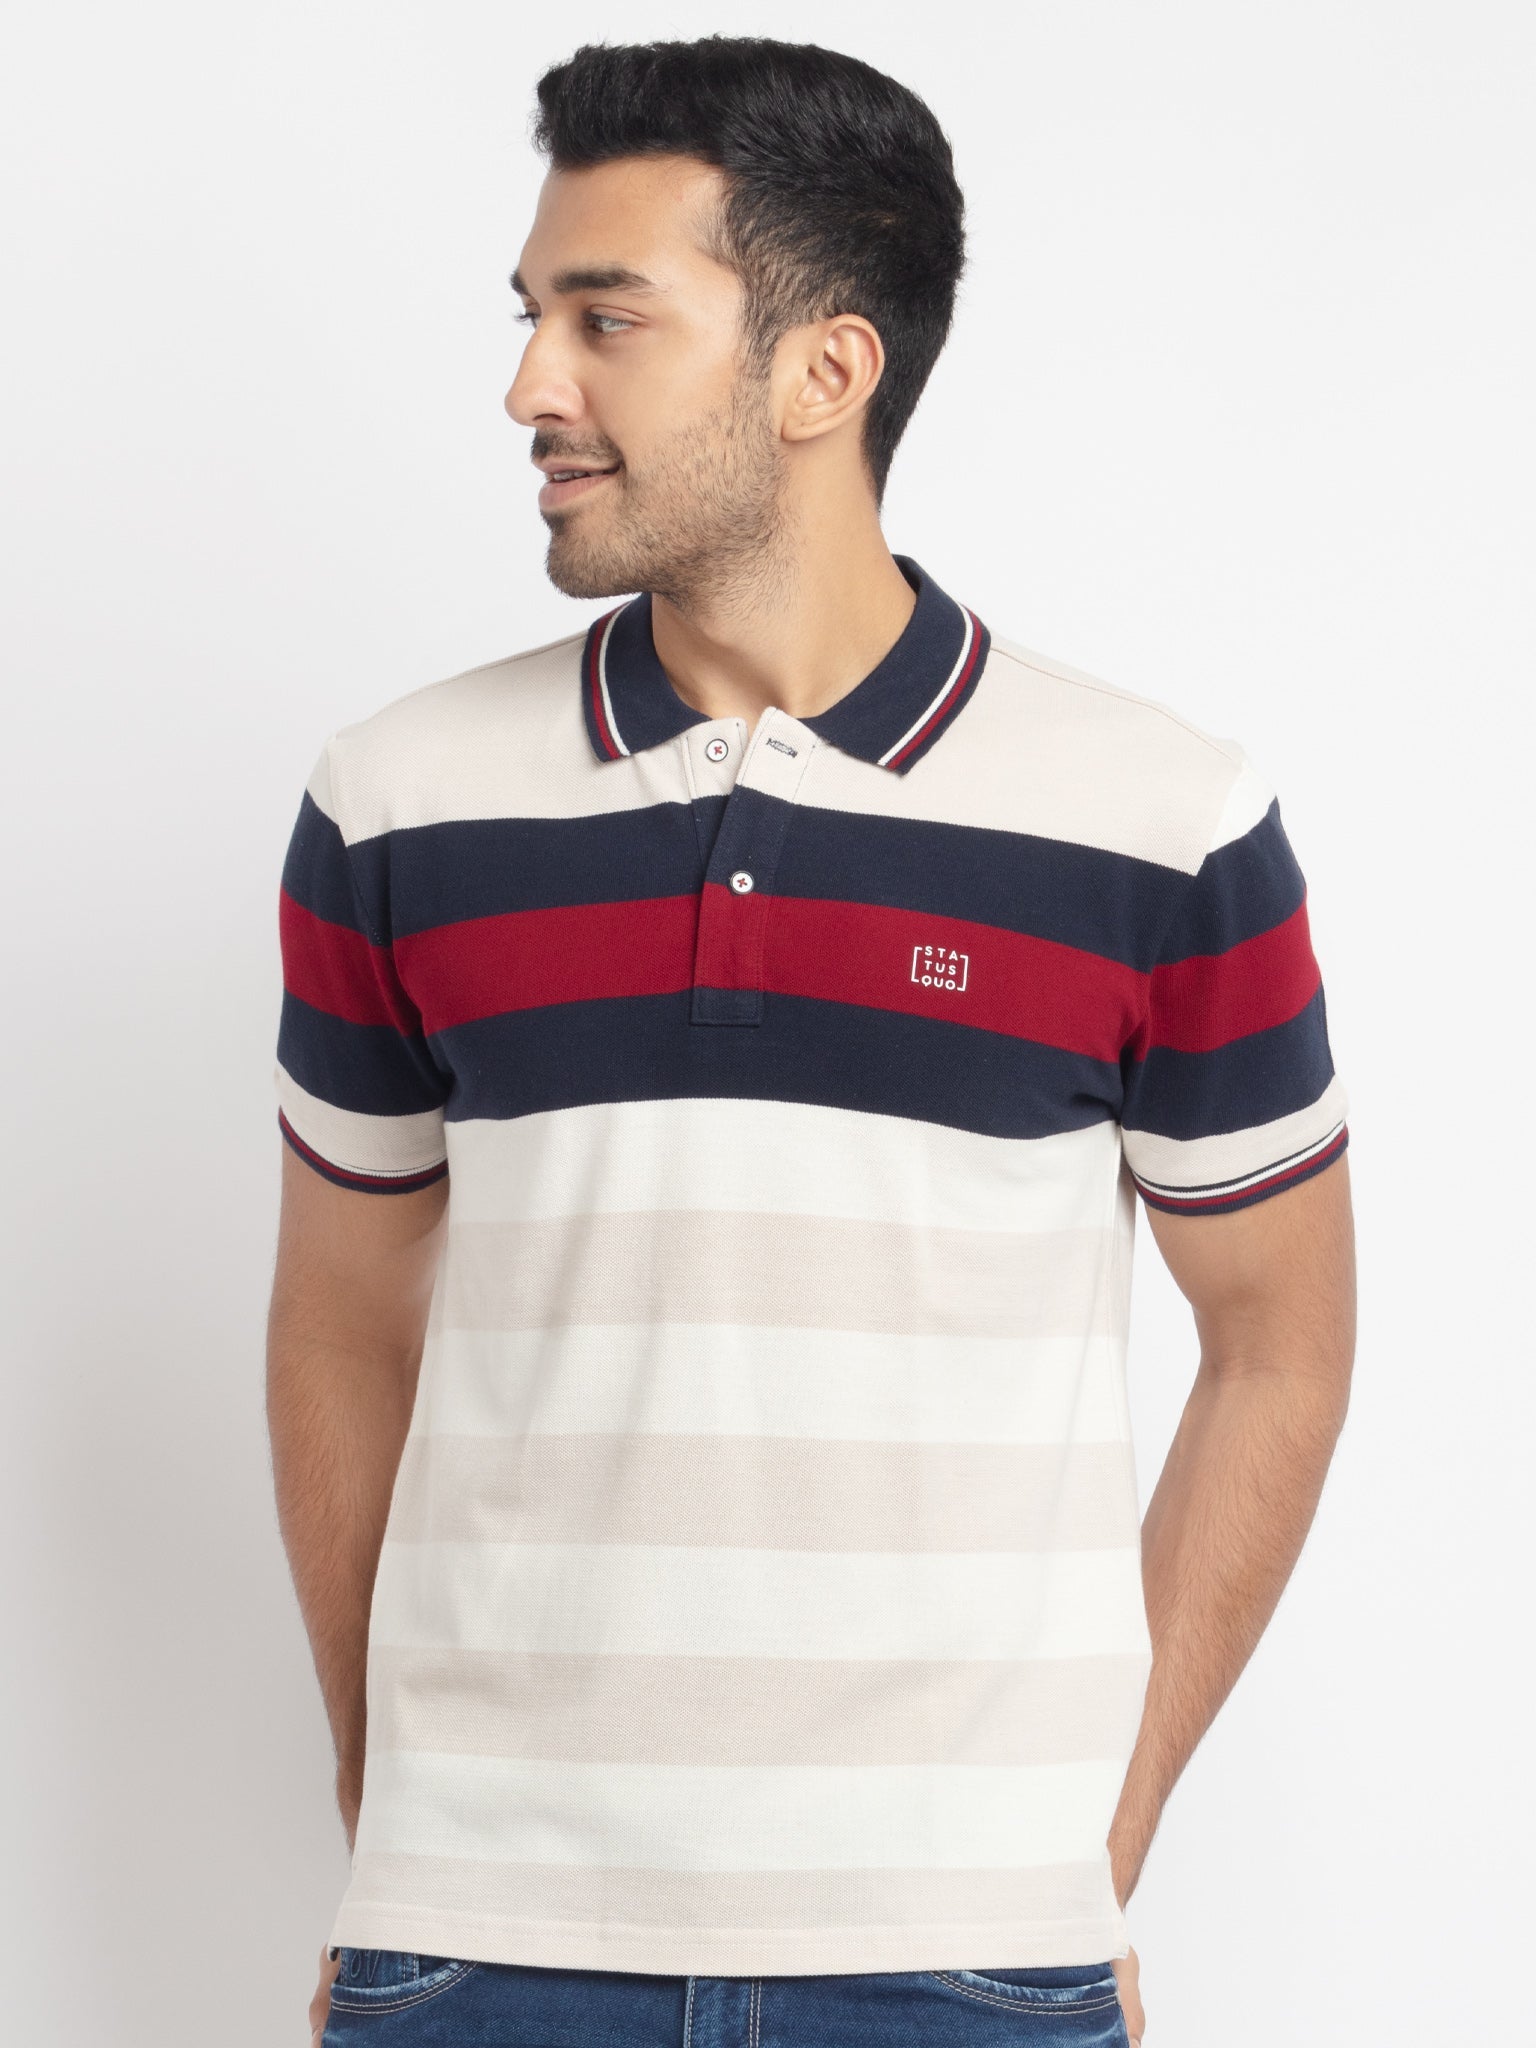 Status Quo |Men's Striped Polo T-shirt - S, M, L, XL, XXL